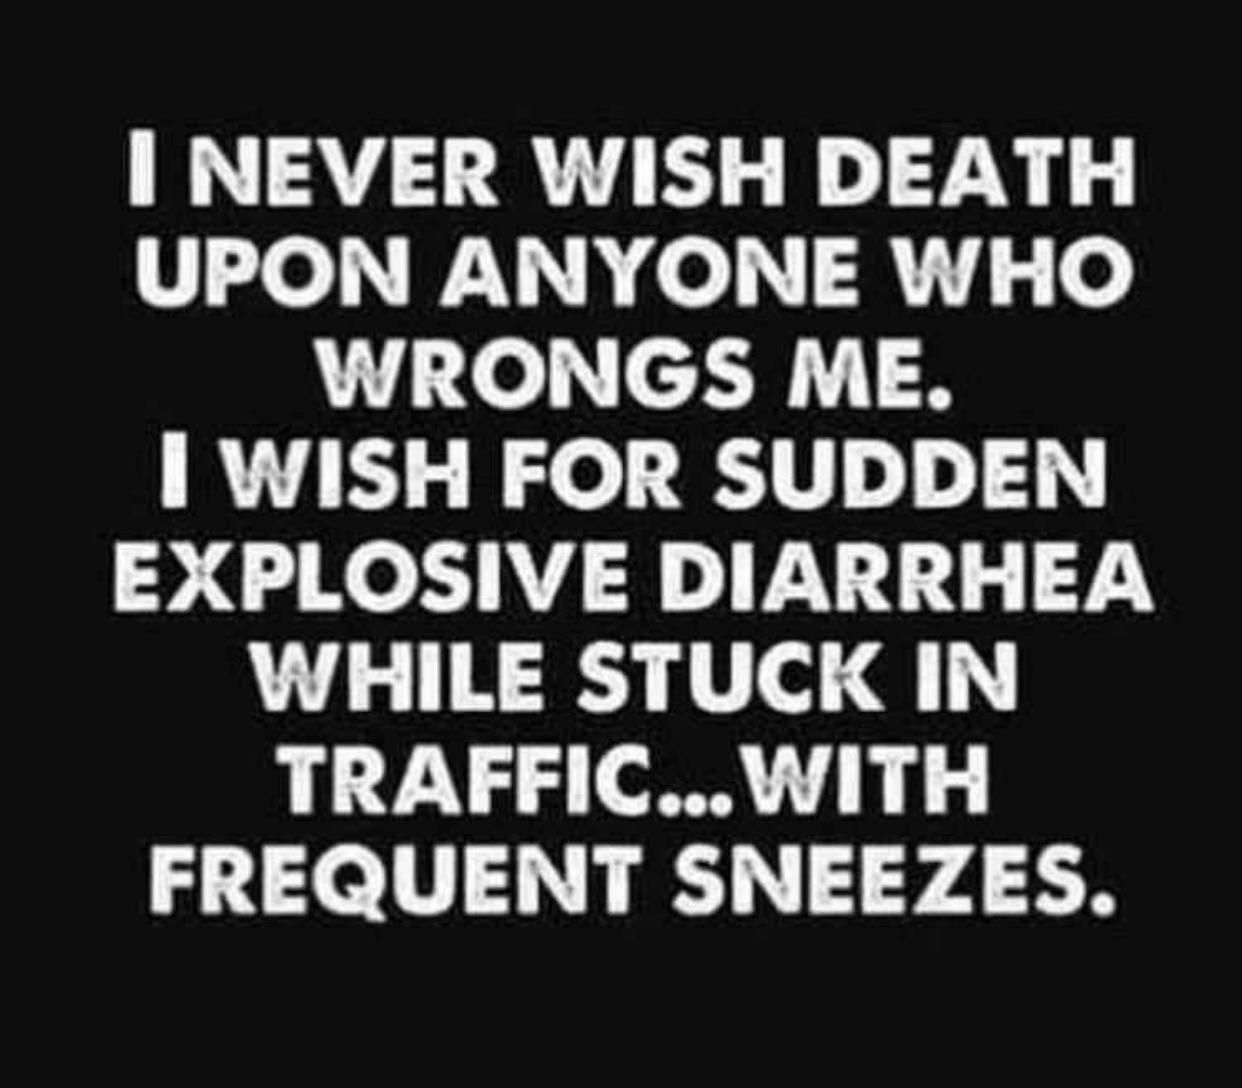 Emphasis on *sneezes*